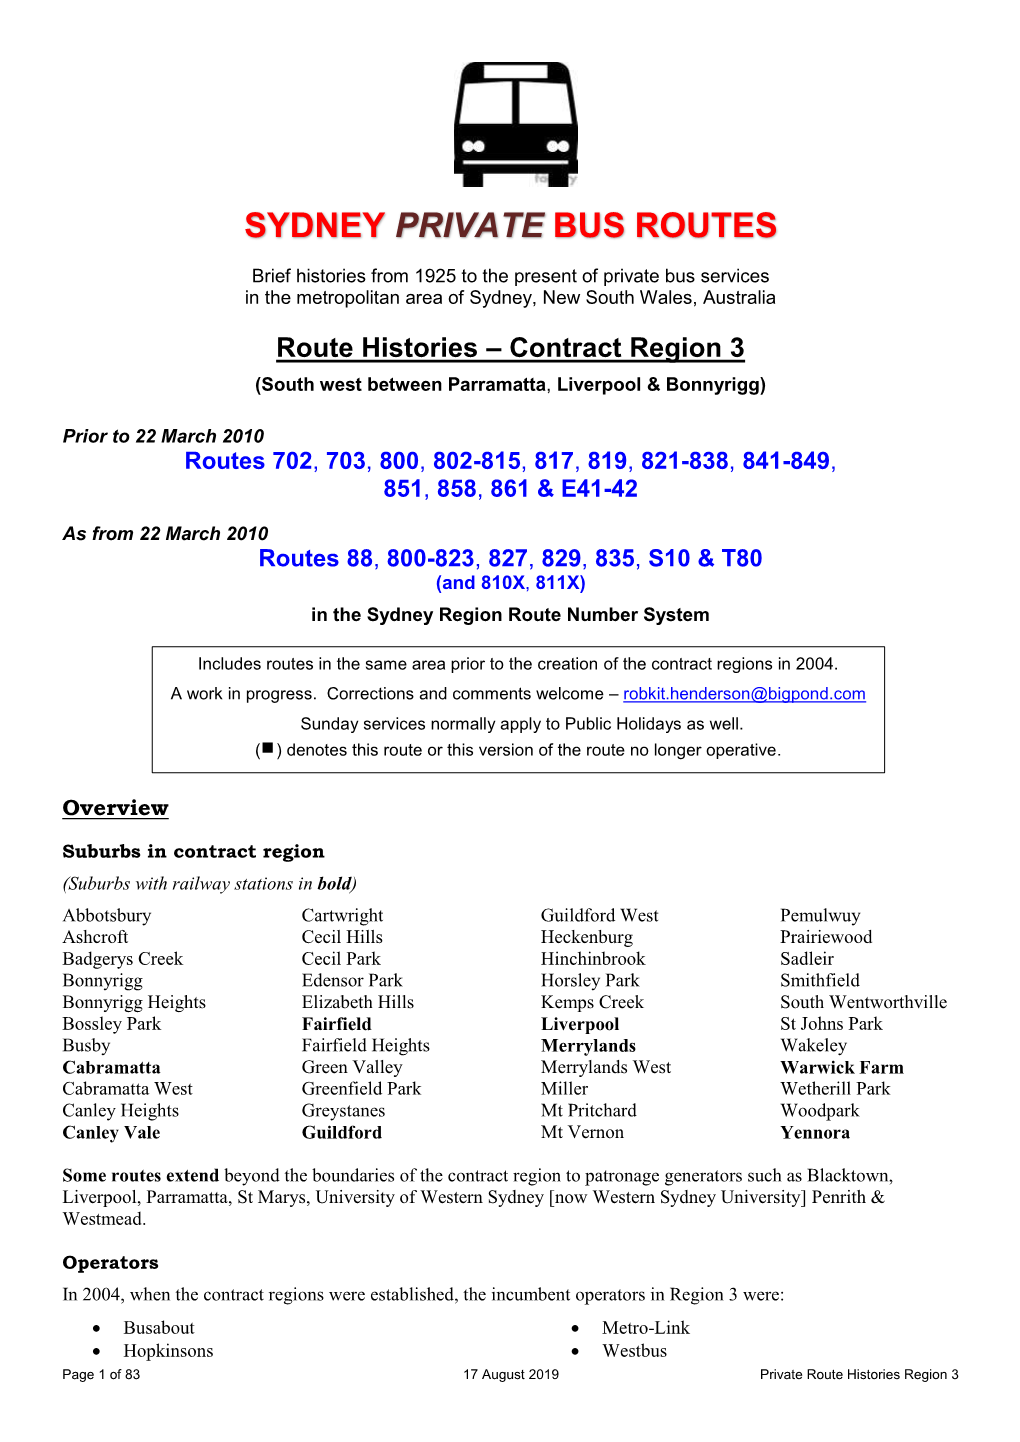 Route Histories – Contract Region 3 (South West Between Parramatta, Liverpool & Bonnyrigg)